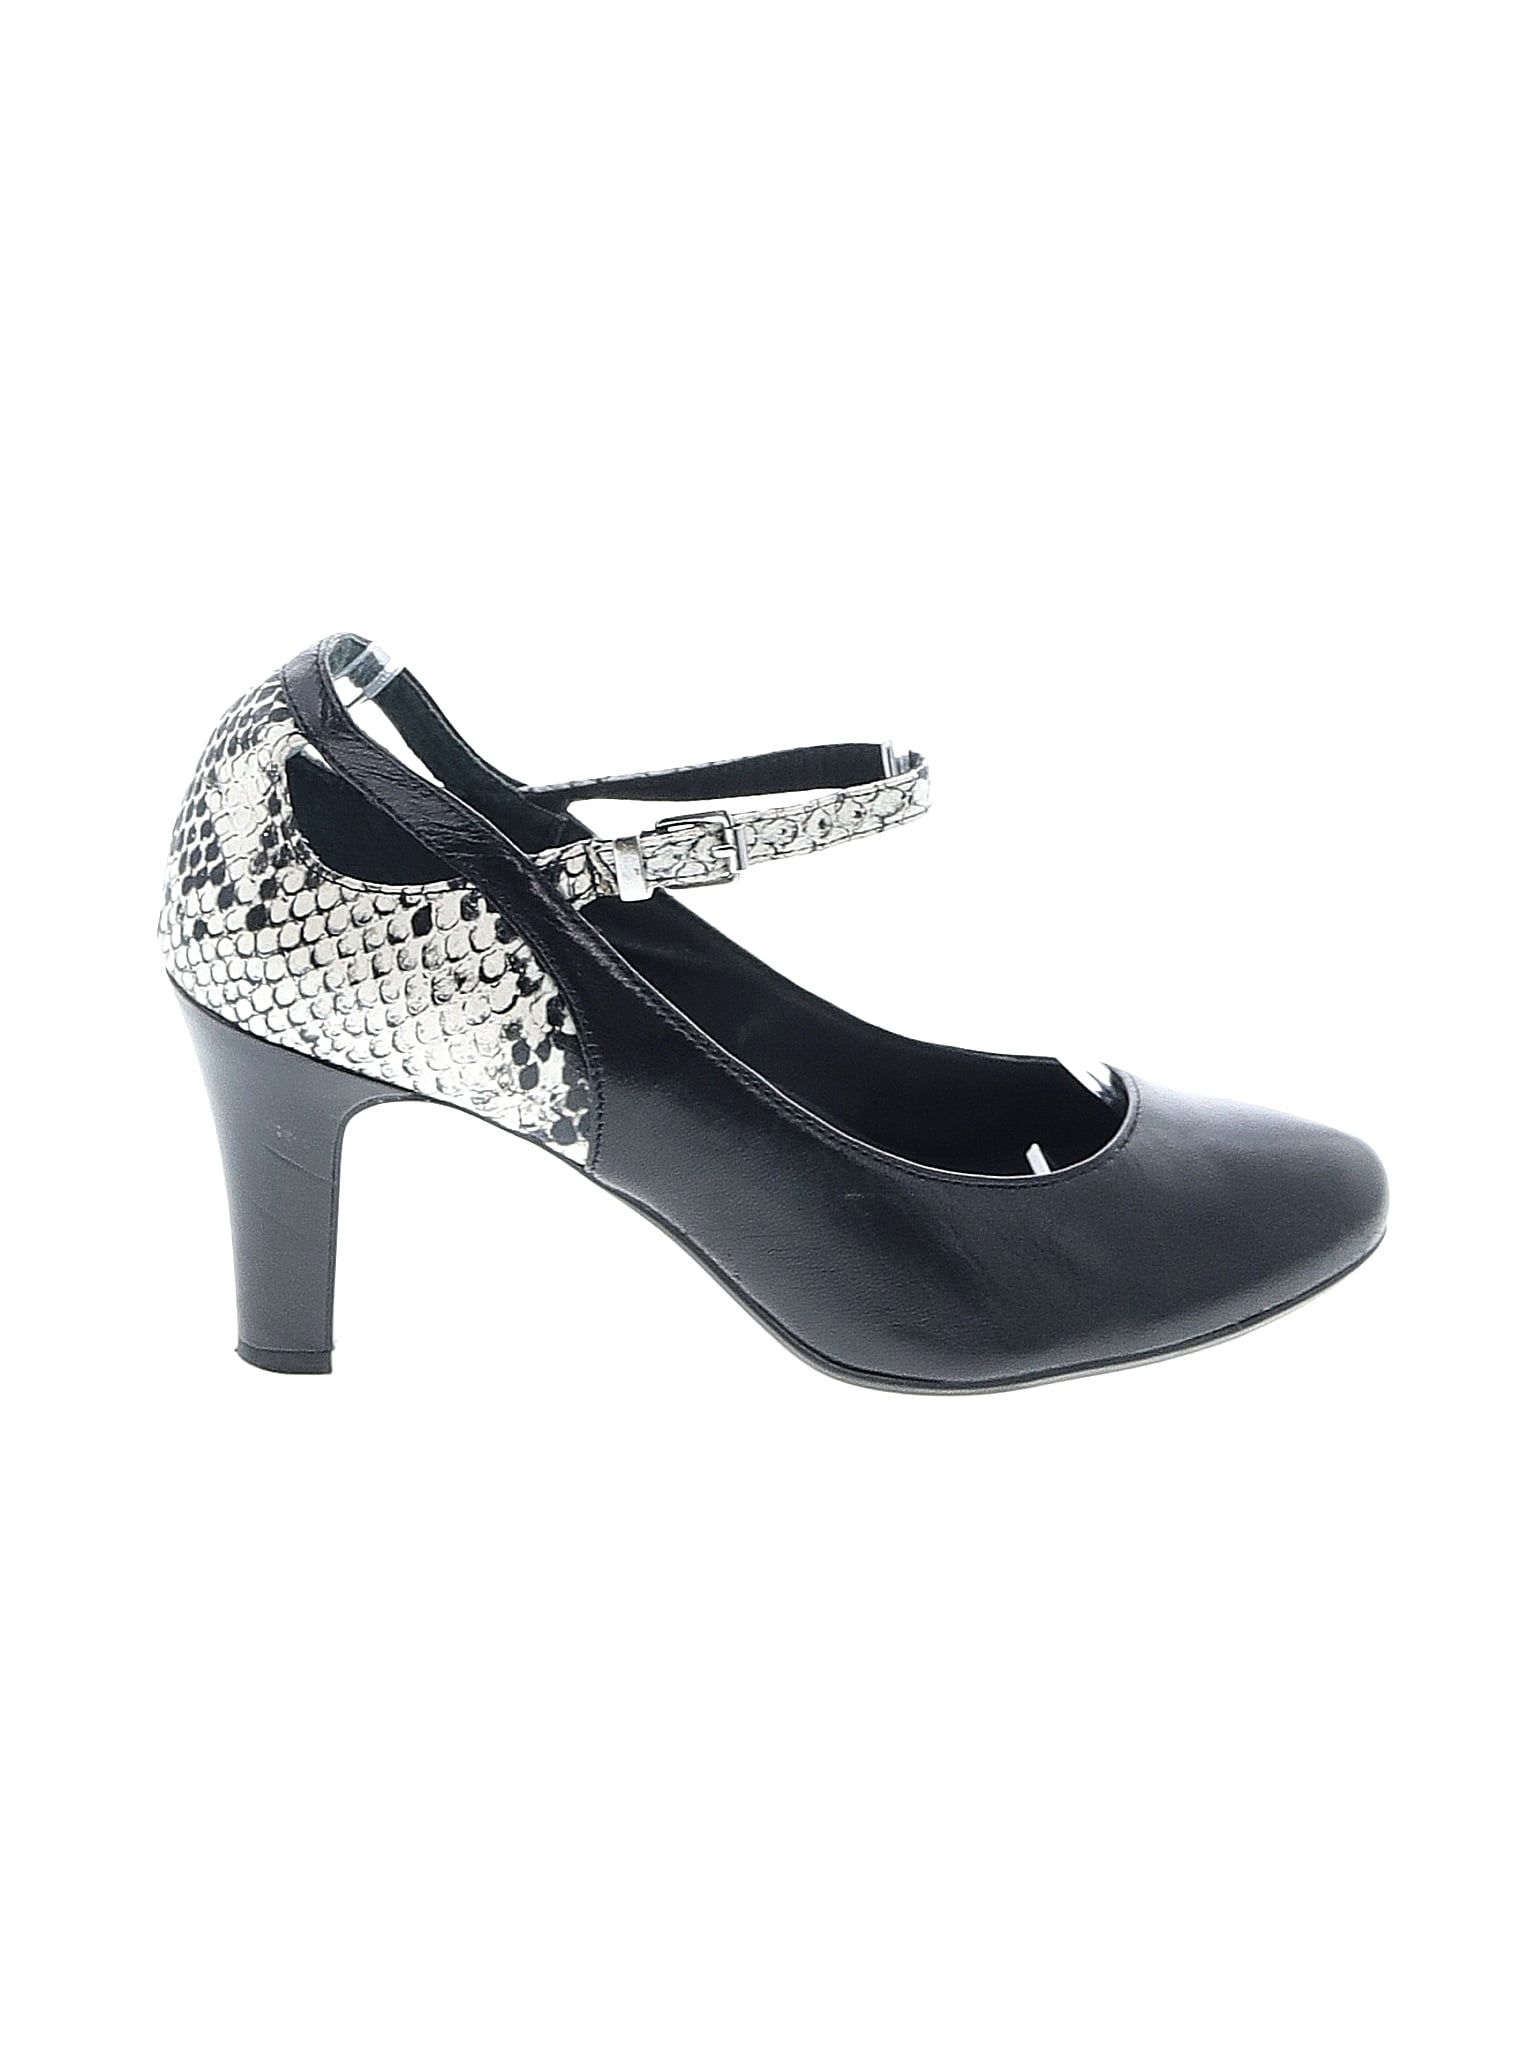 Giani Bernini Black Heels Size 7 1/2 - 77% off | thredUP